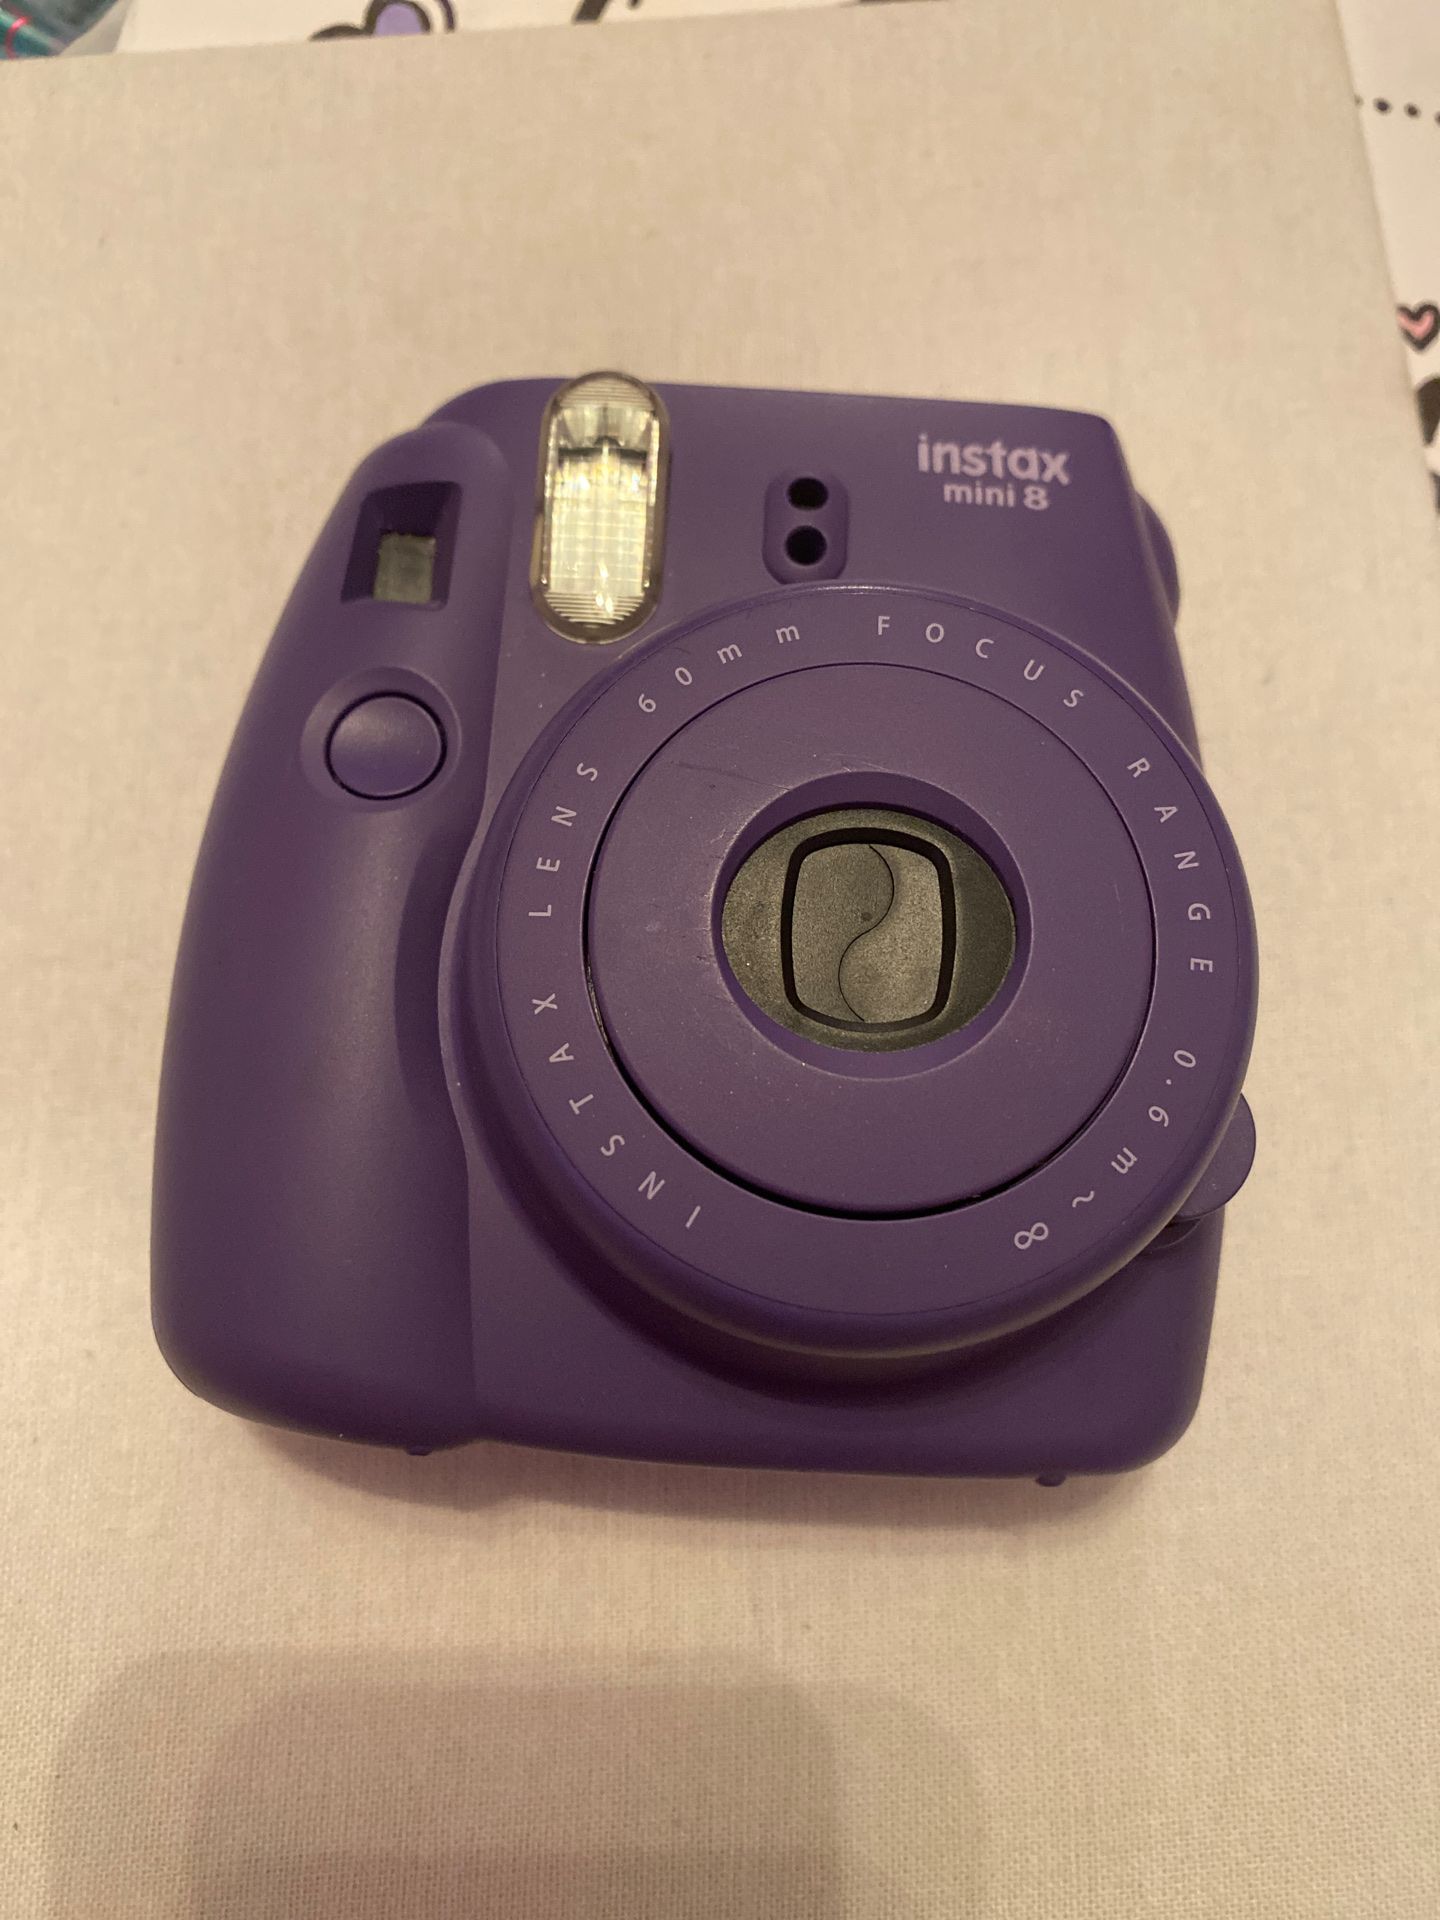 Instax mini 8 Polaroid camera purple